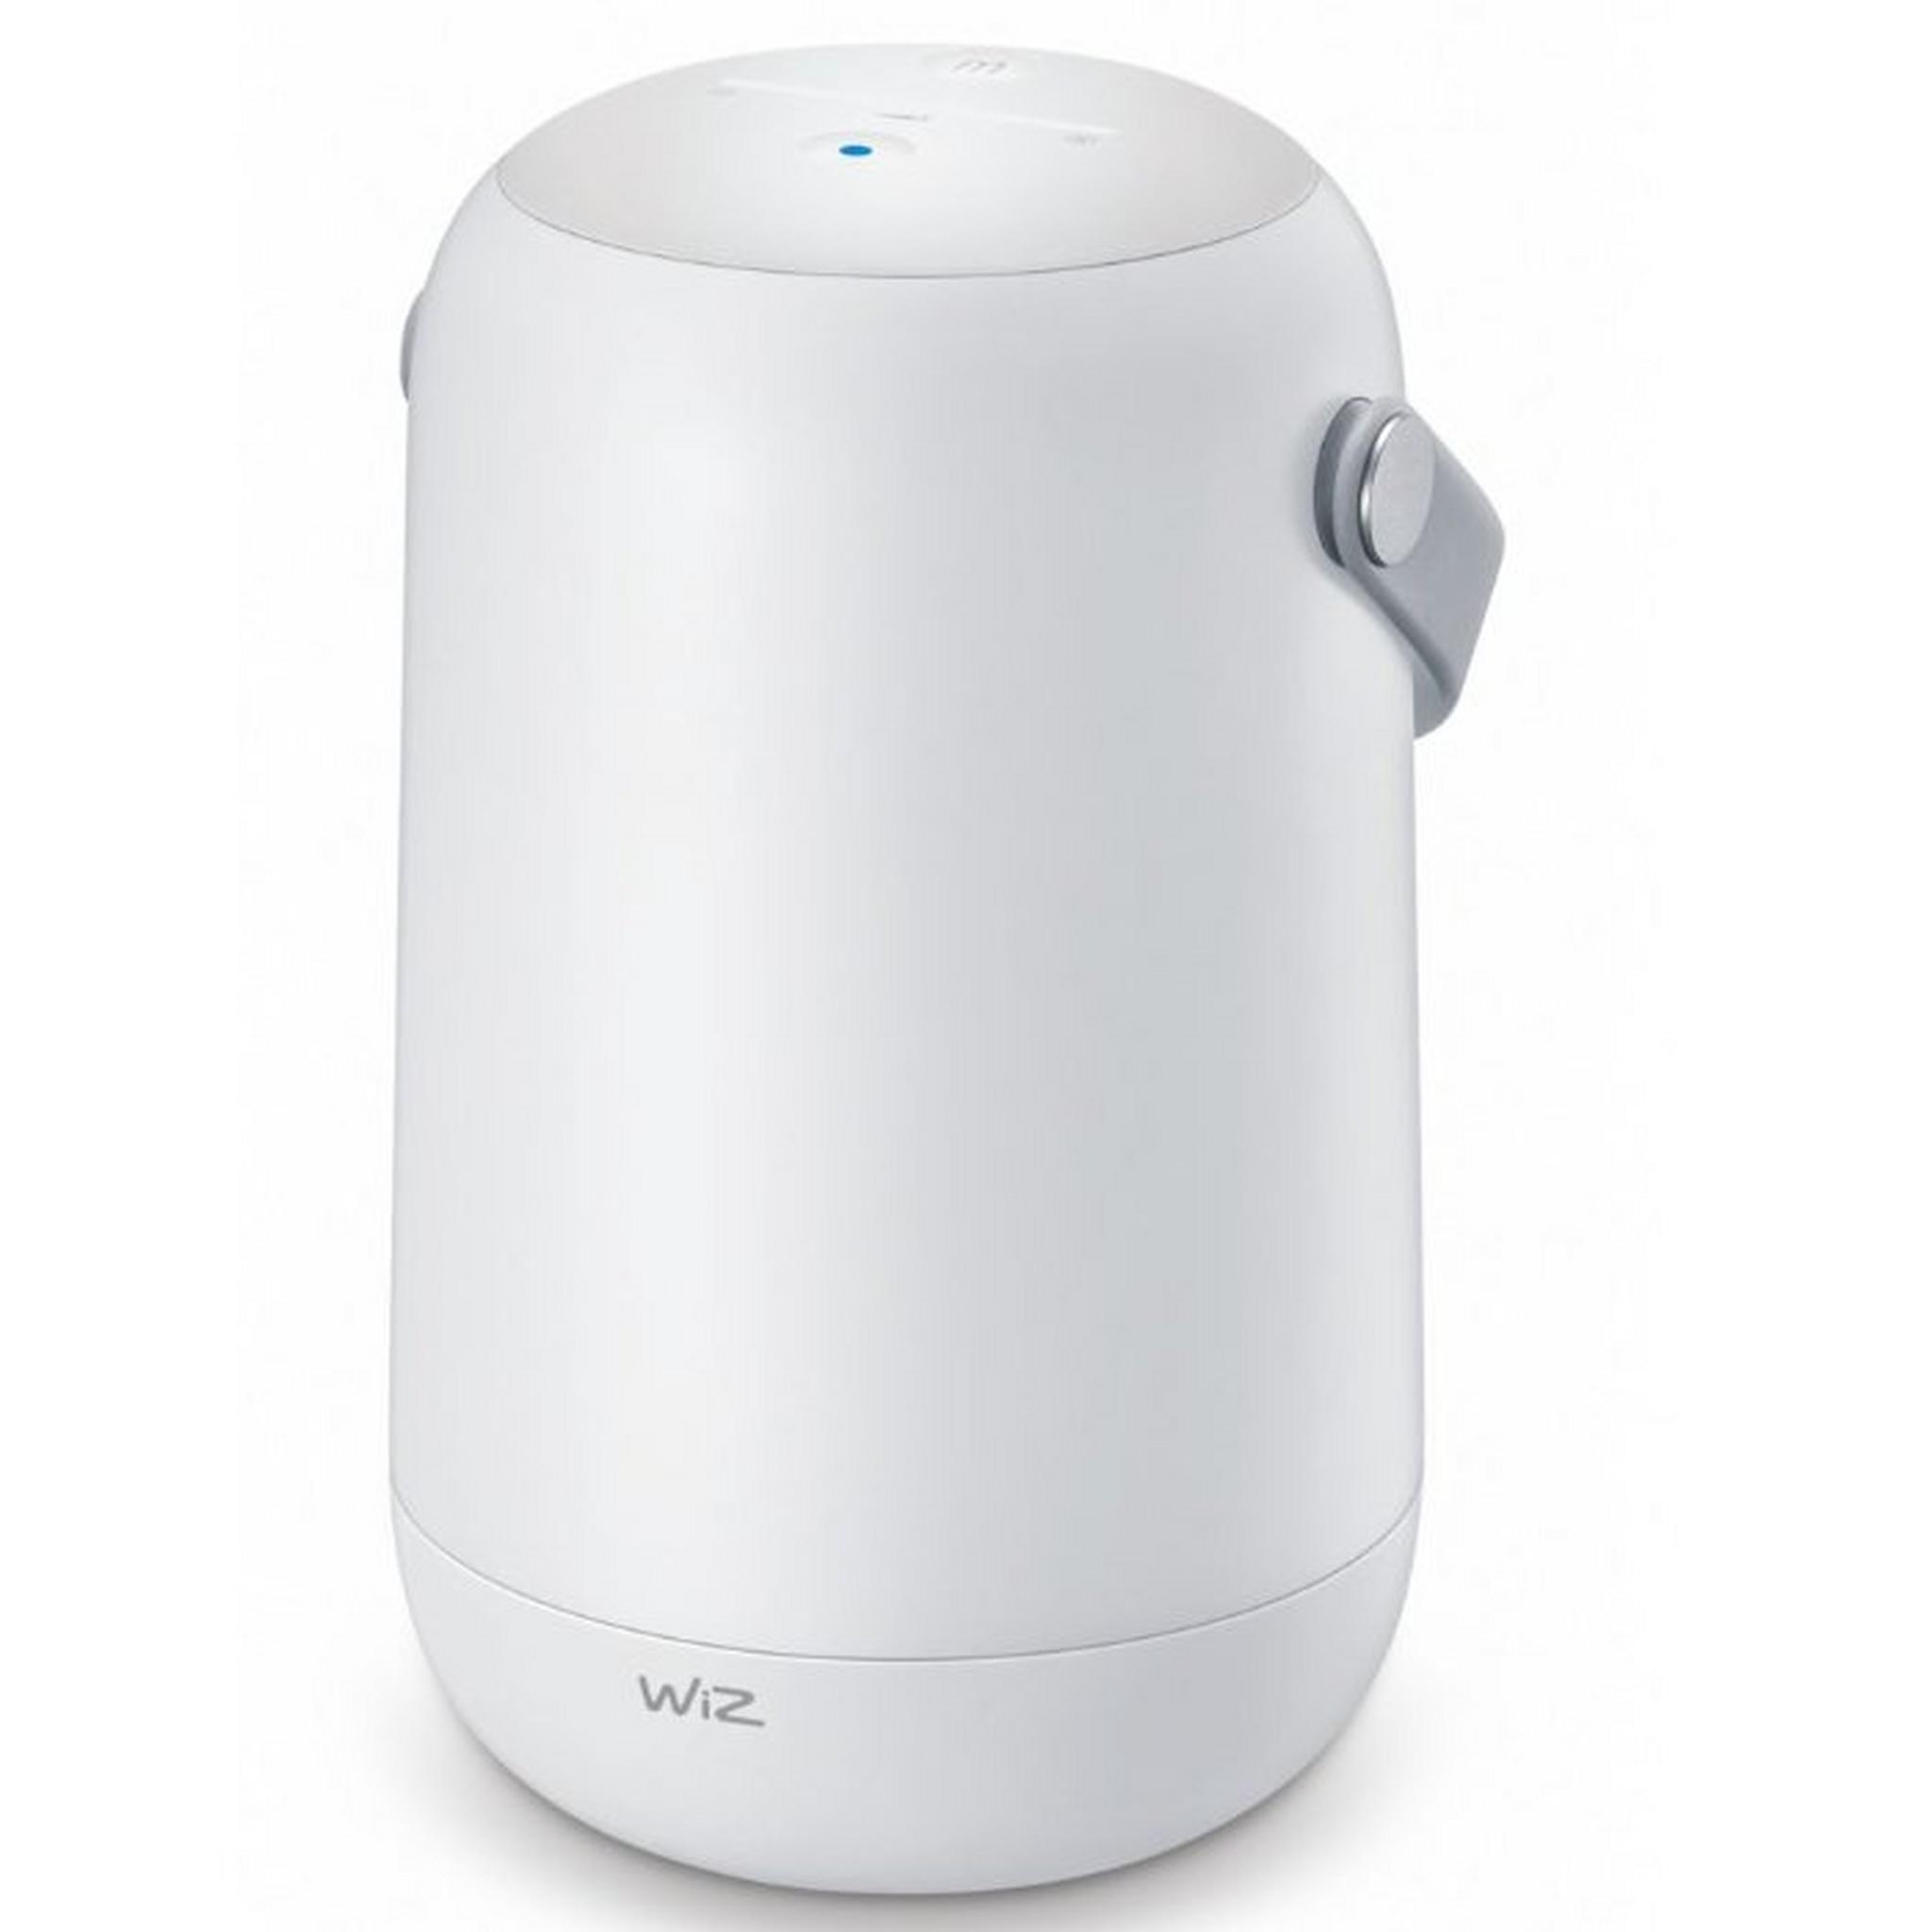 Philips Wiz Portable Wireless Light, 929003211501 – White